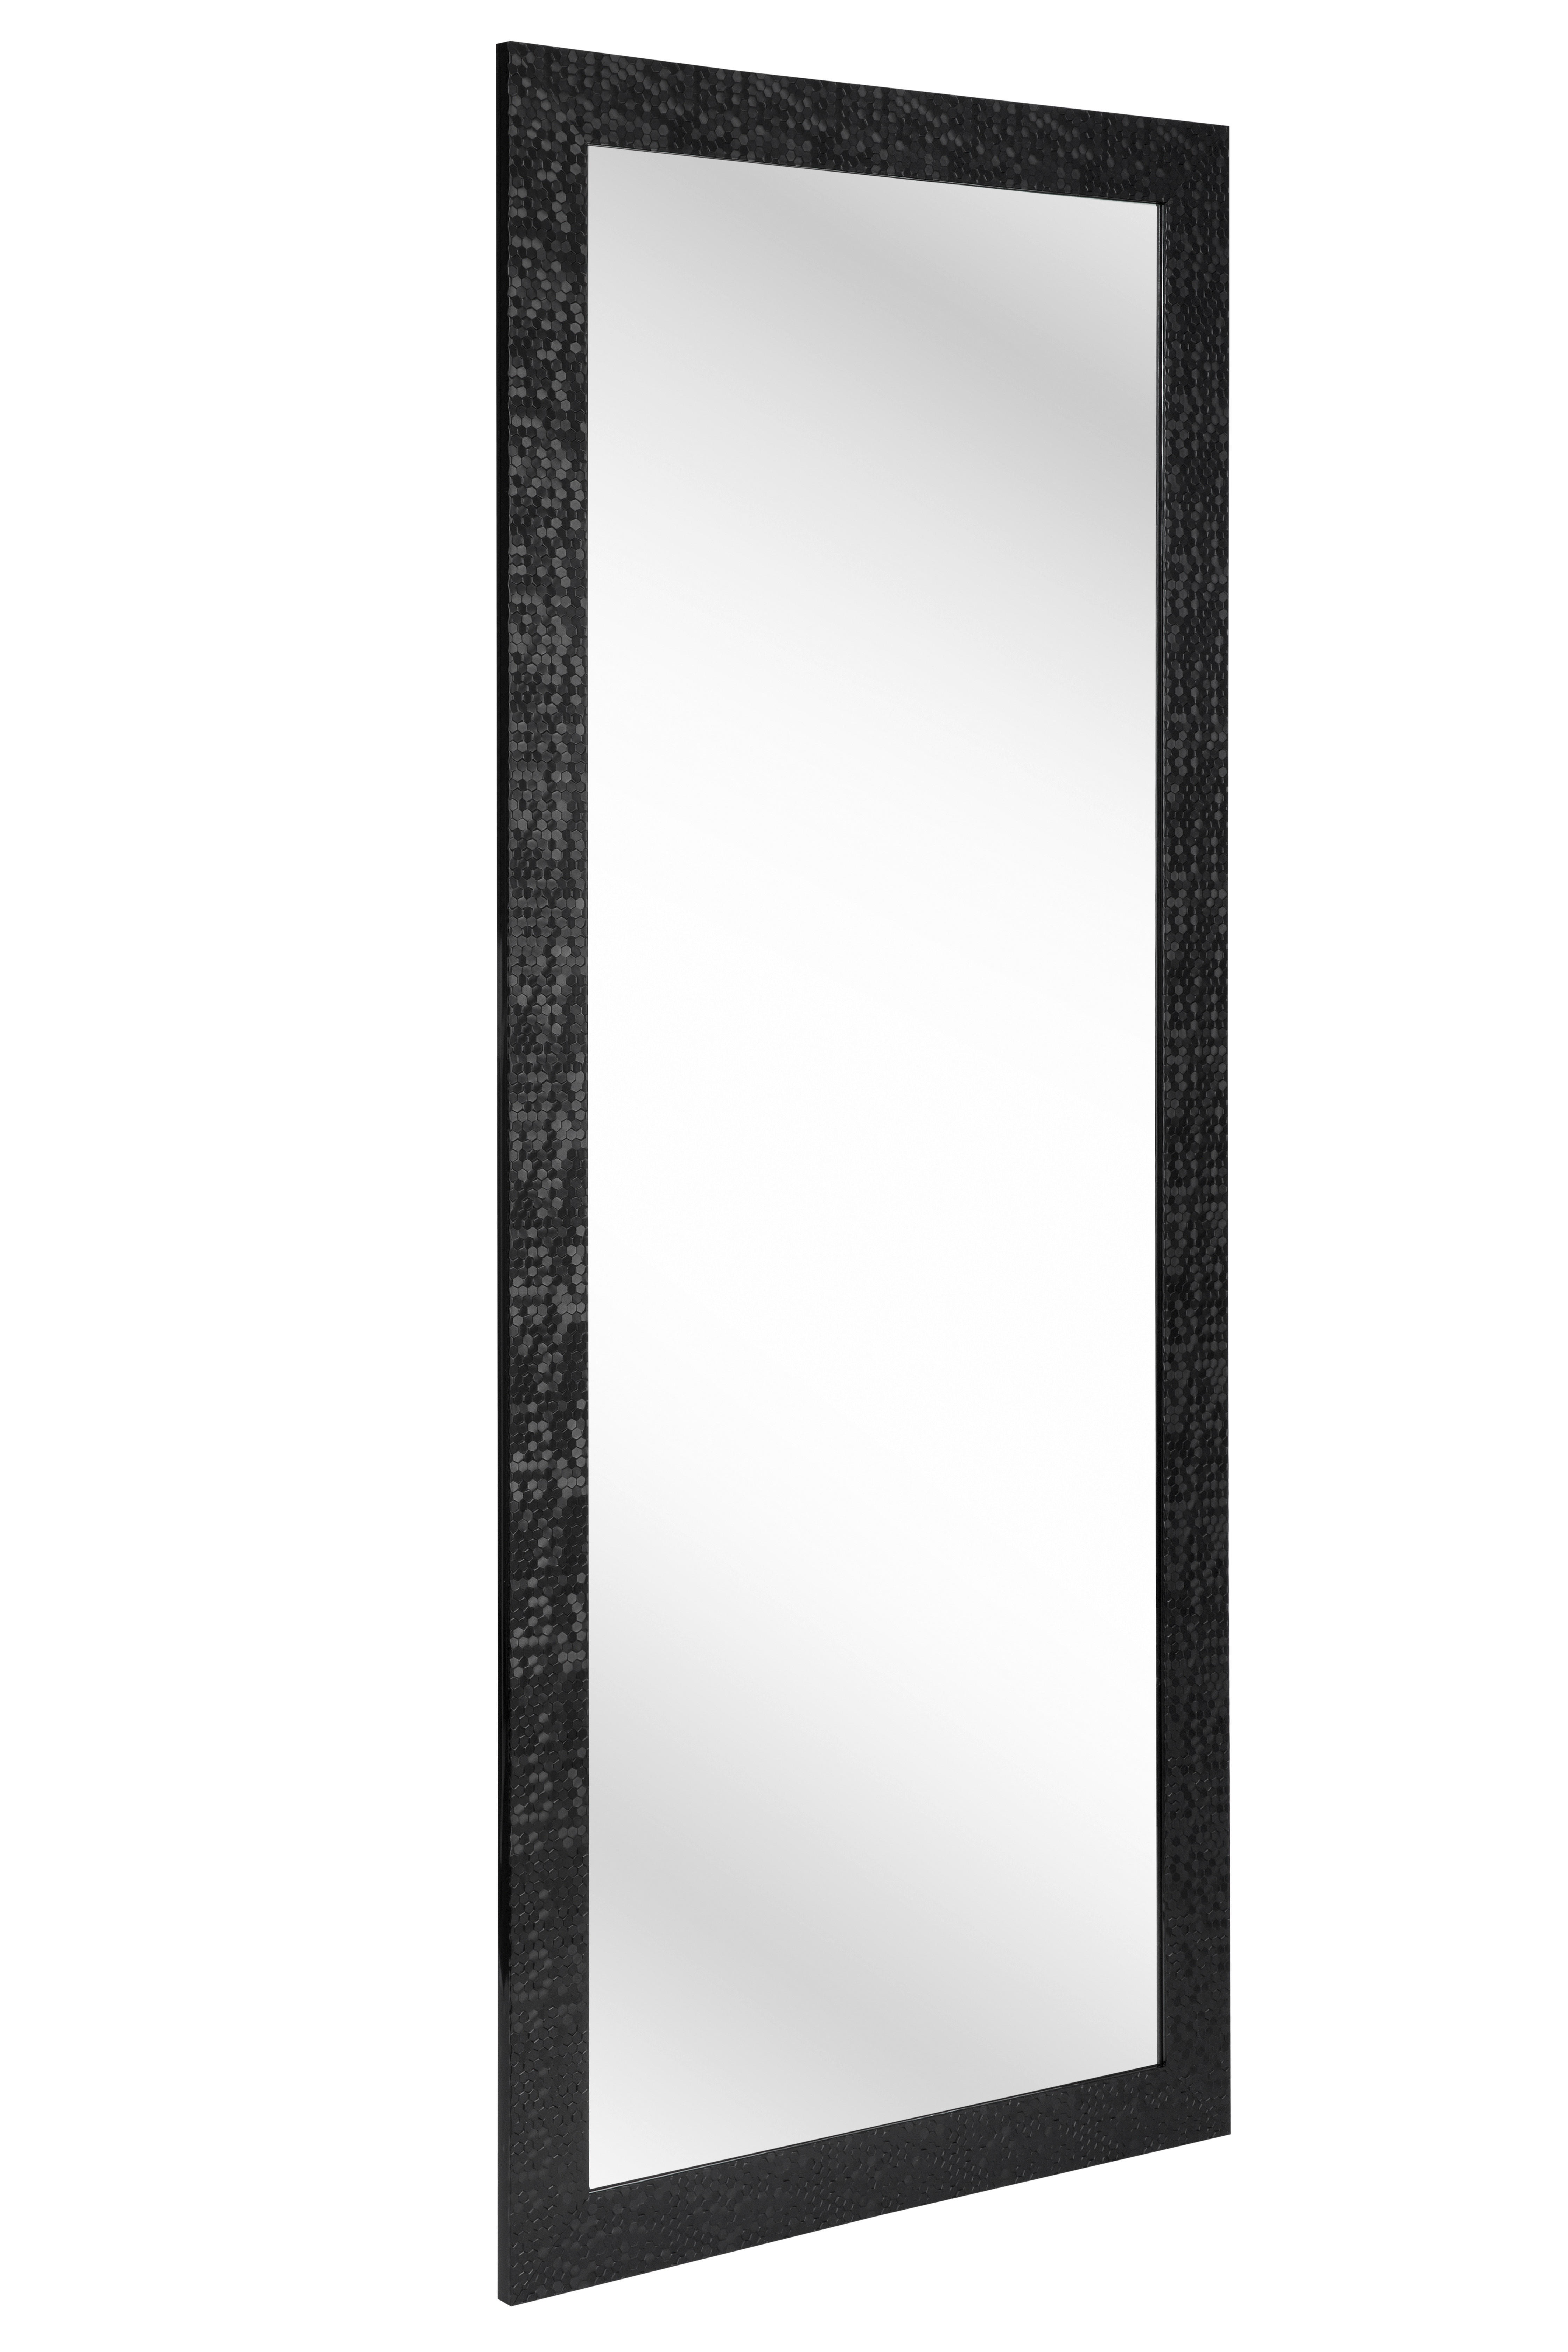 WANDSPIEGEL 70/170/2 cm  - Schwarz, Lifestyle, Glas/Kunststoff (70/170/2cm) - Carryhome